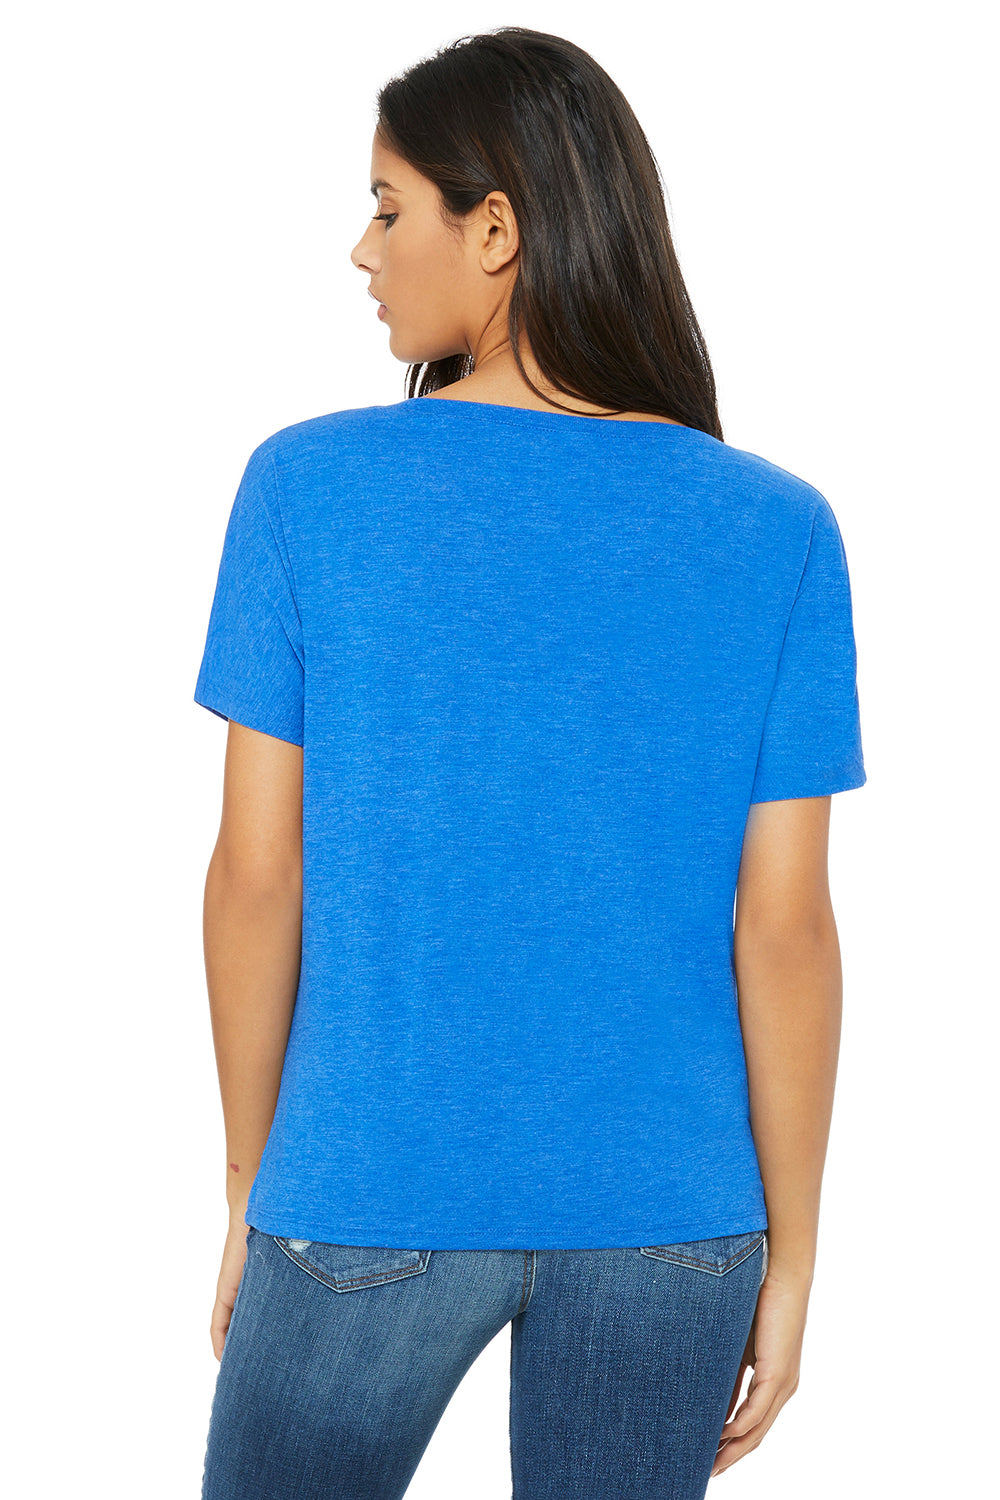 Bella + Canvas 8815 Womens Slouchy Short Sleeve V-Neck T-Shirt Royal Blue Triblend Back